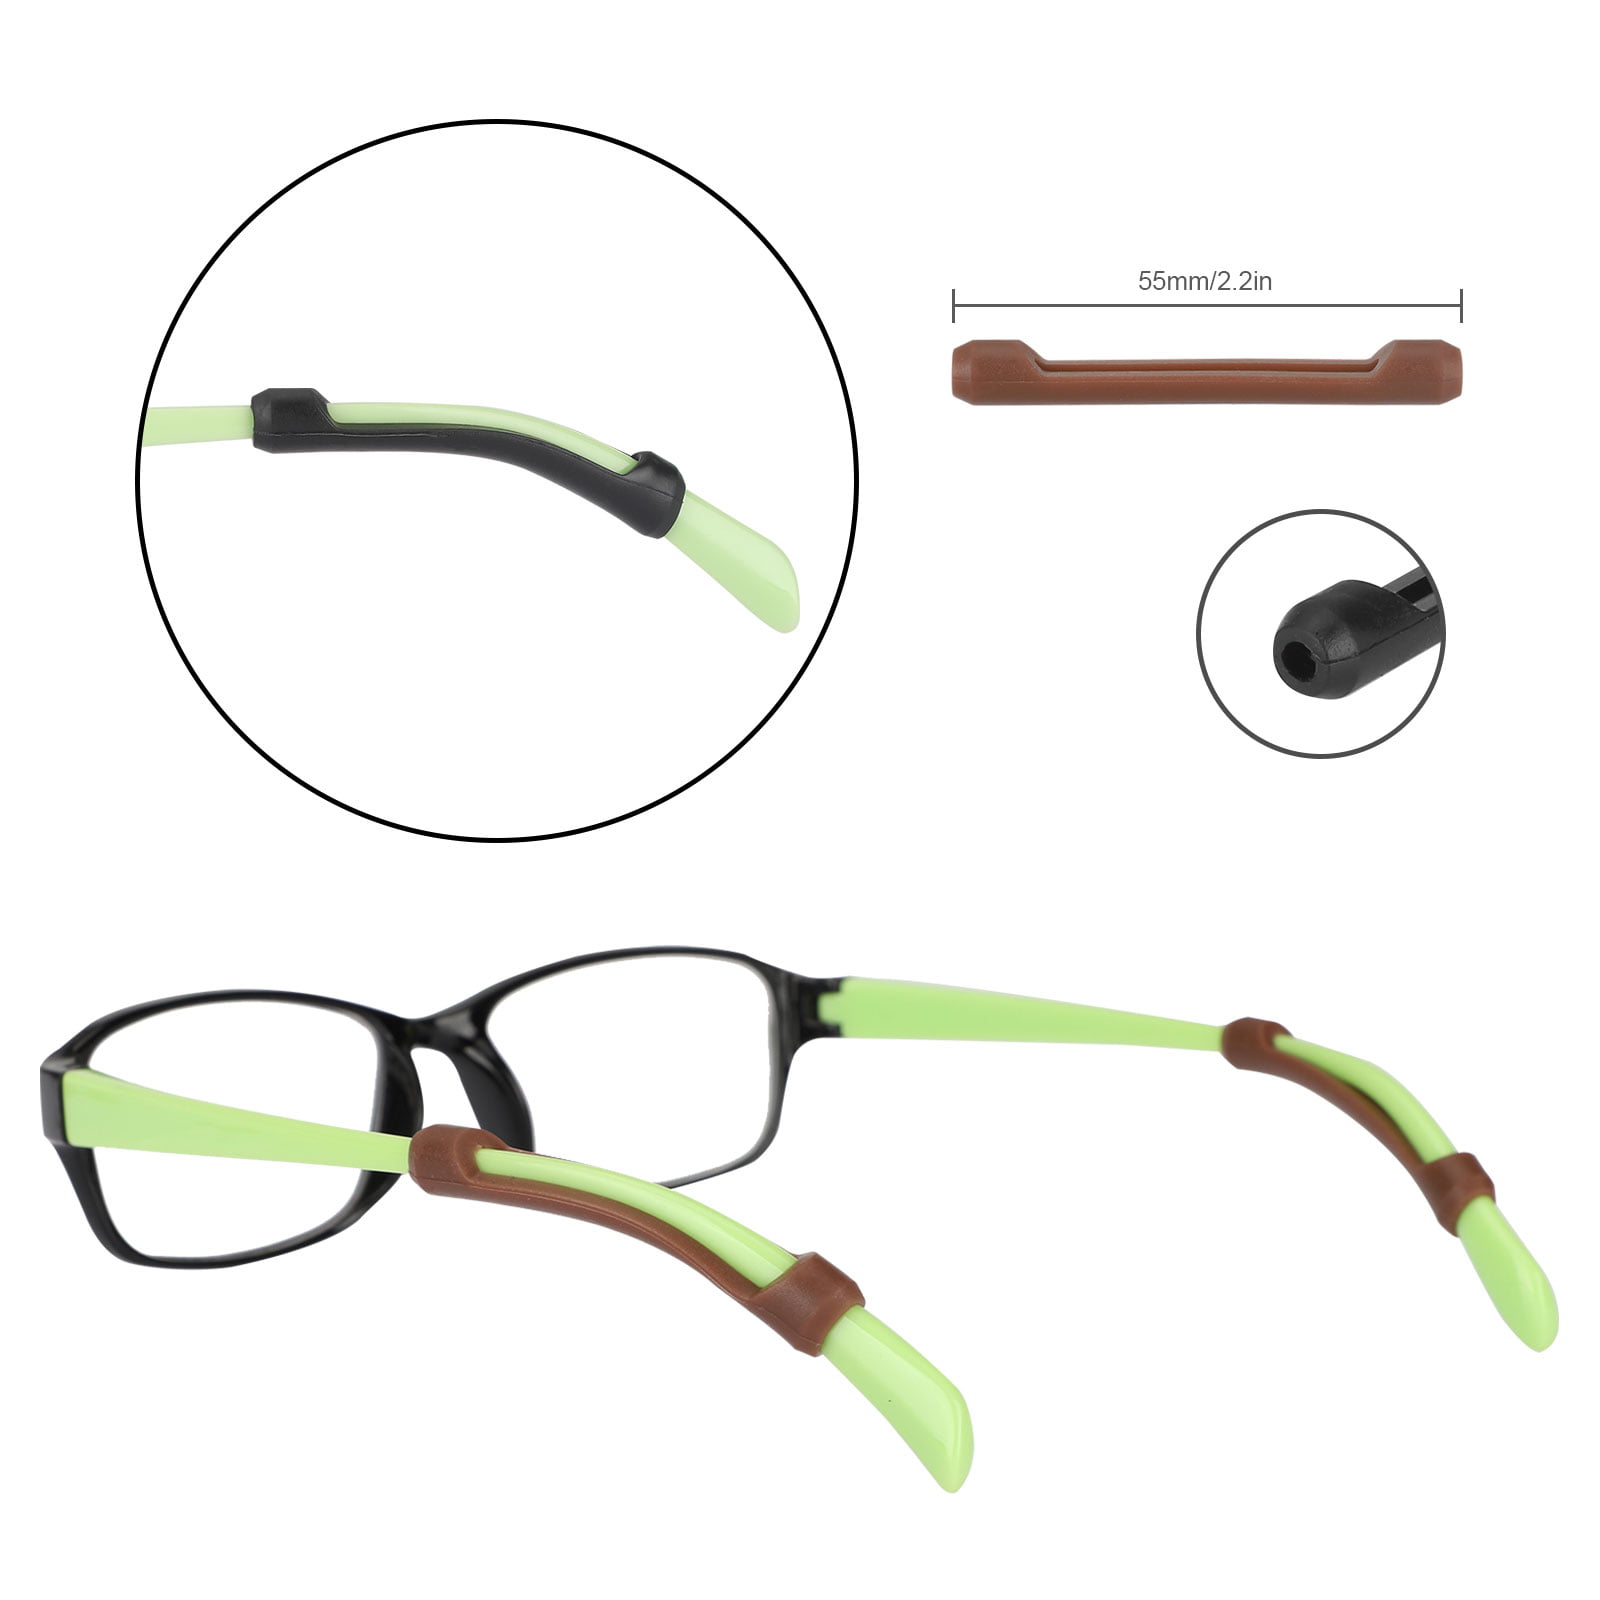 MoKo 16 Pairs Eyeglasses Retainer Soft Silicone Anti-Slip Eyeglass Ear Gripper Holders Comfort Round Glasses Temple Tips Sleeve Retainer Ear Grip Hooks for Spectacle Sunglasses Reading Glasses